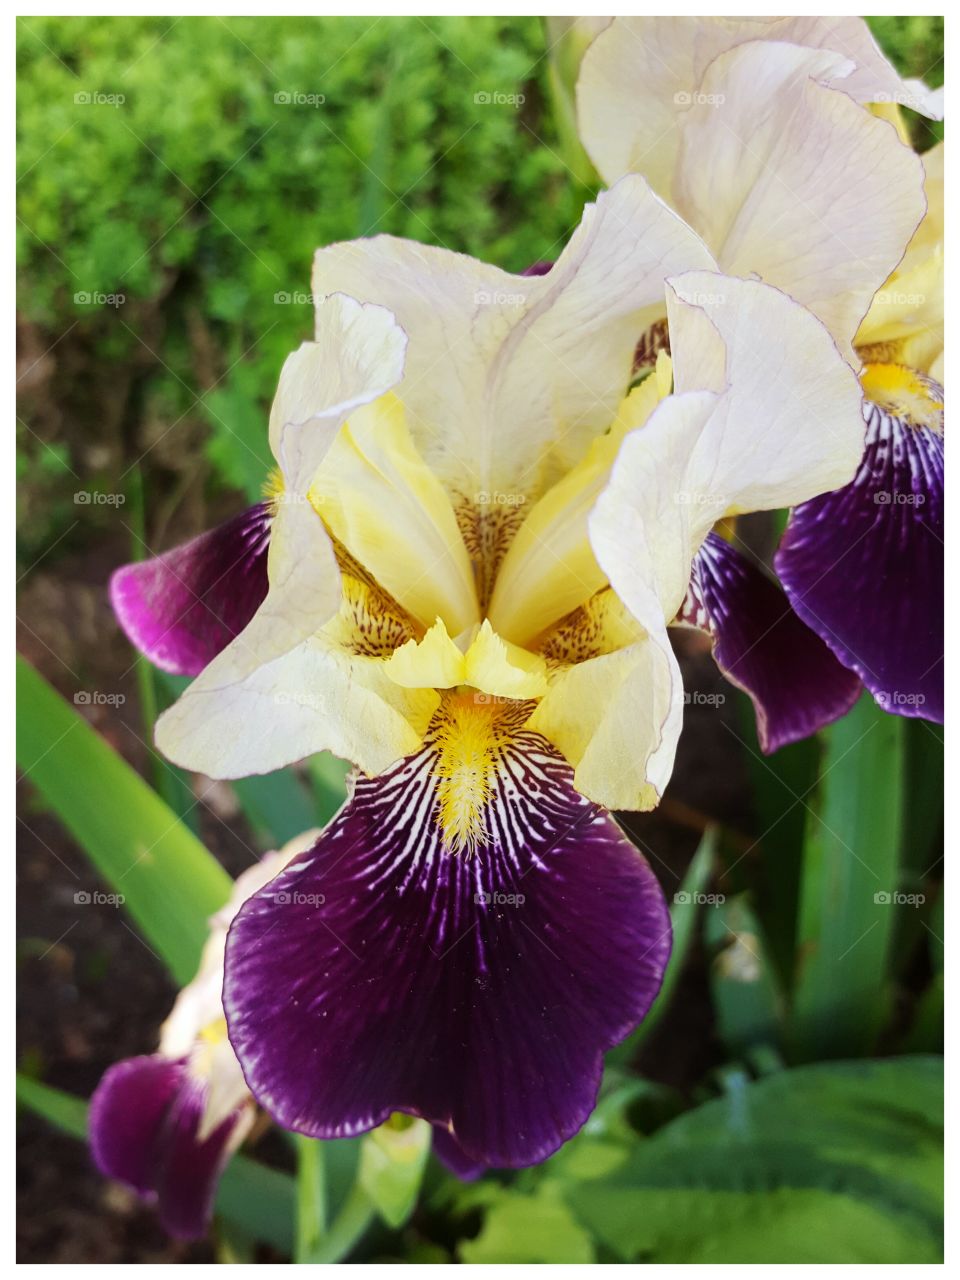 A beautiful Iris